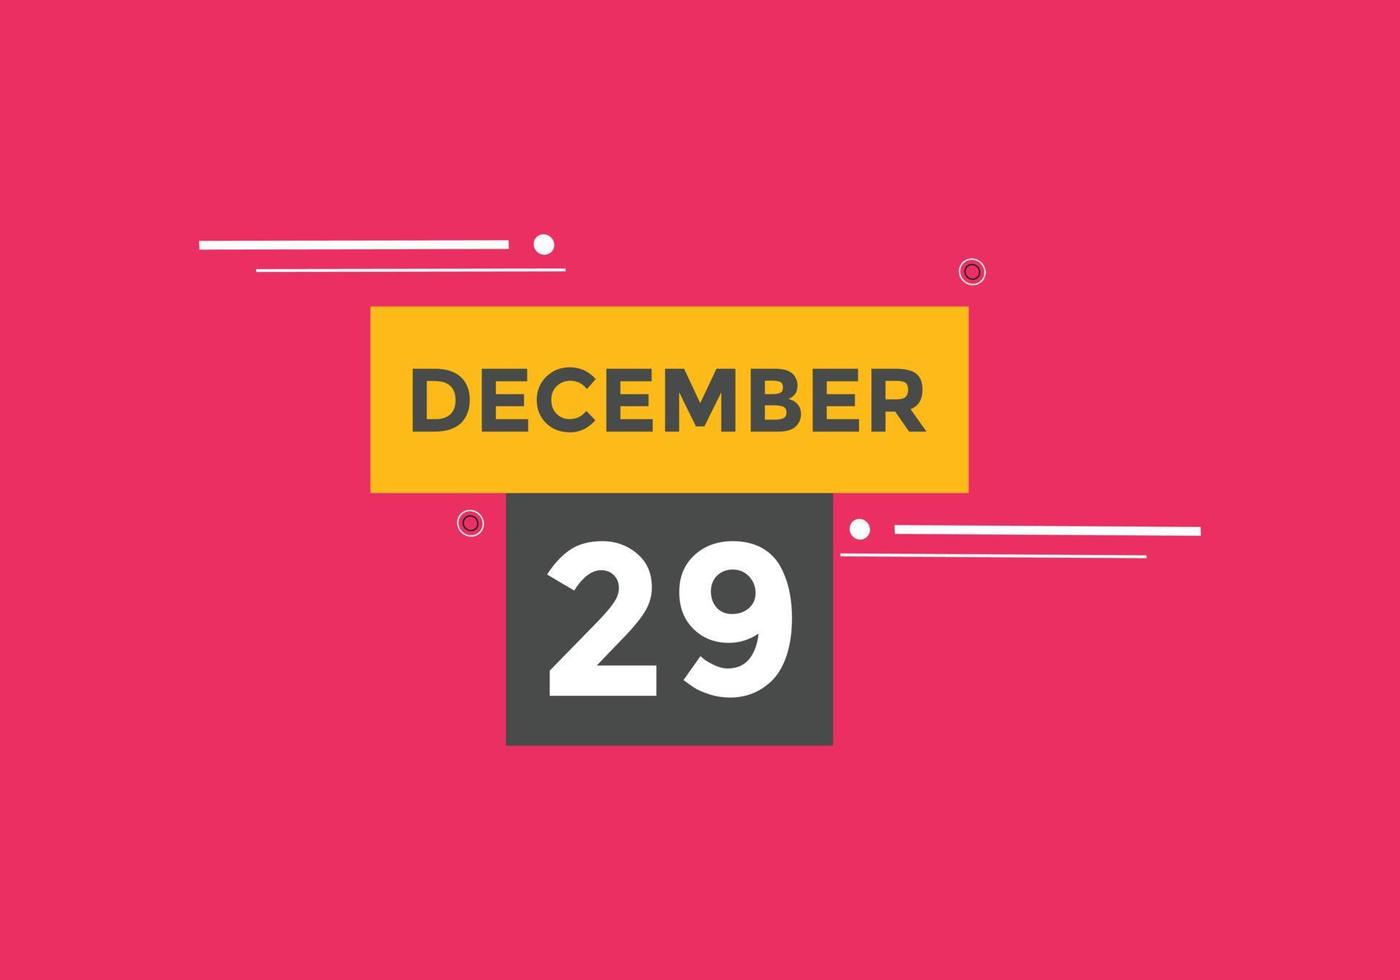 december 29 calendar reminder. 29th december daily calendar icon template. Calendar 29th december icon Design template. Vector illustration